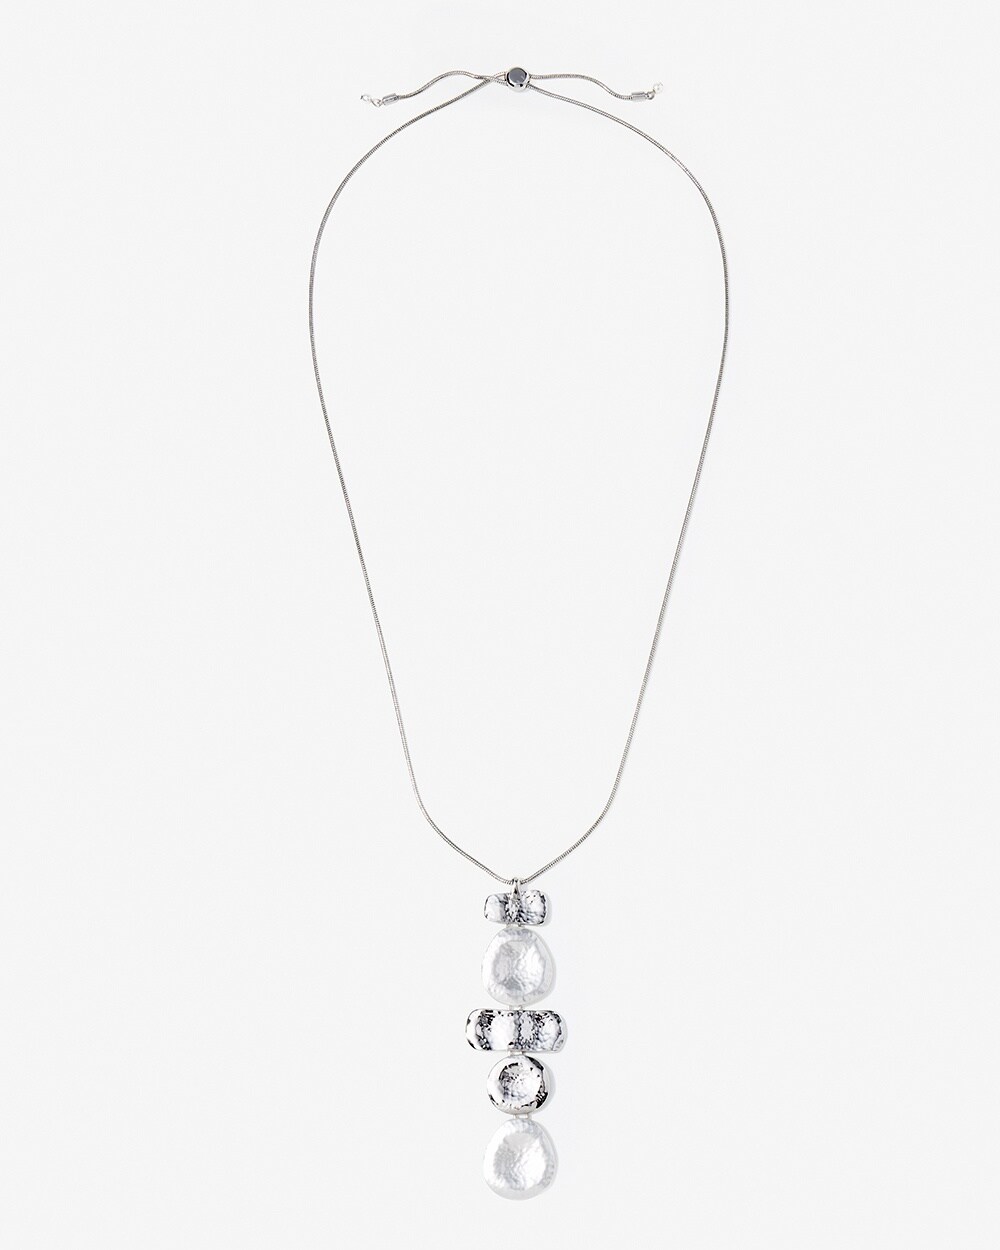 Silvertone Pendant Adjustable Necklace